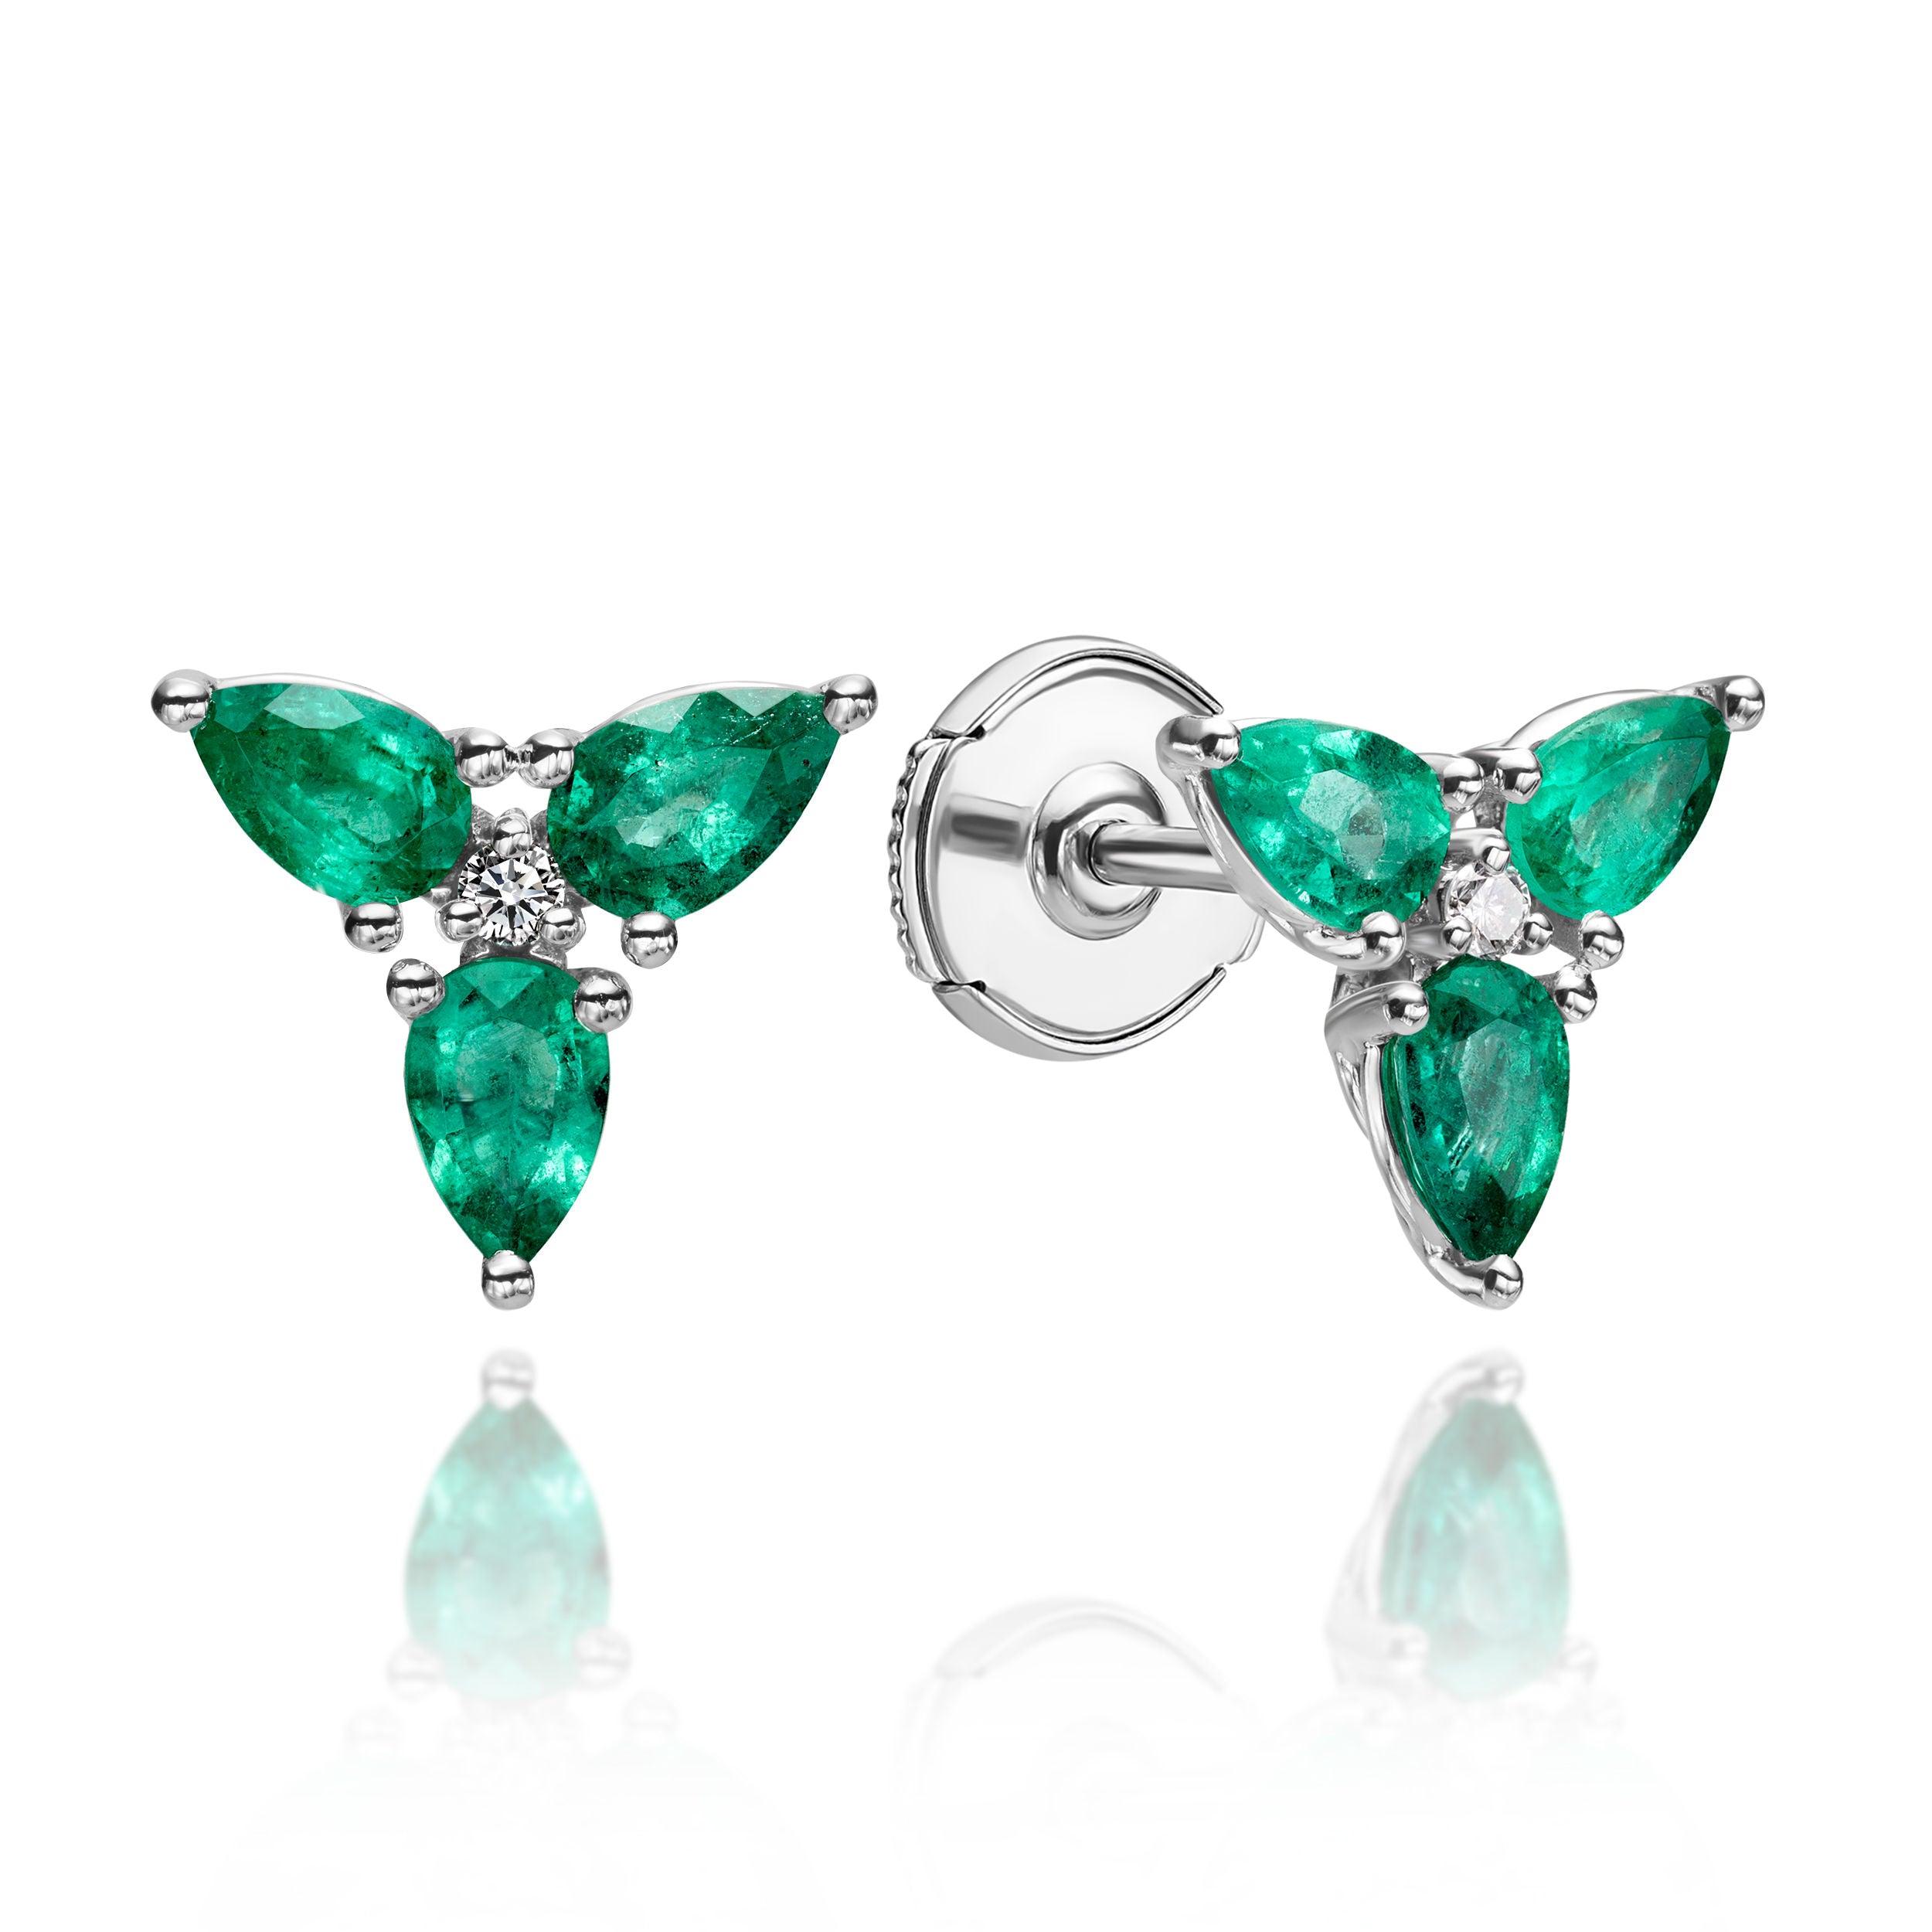 PS Emerald Earrings With Diamonds - 1.23ct TW